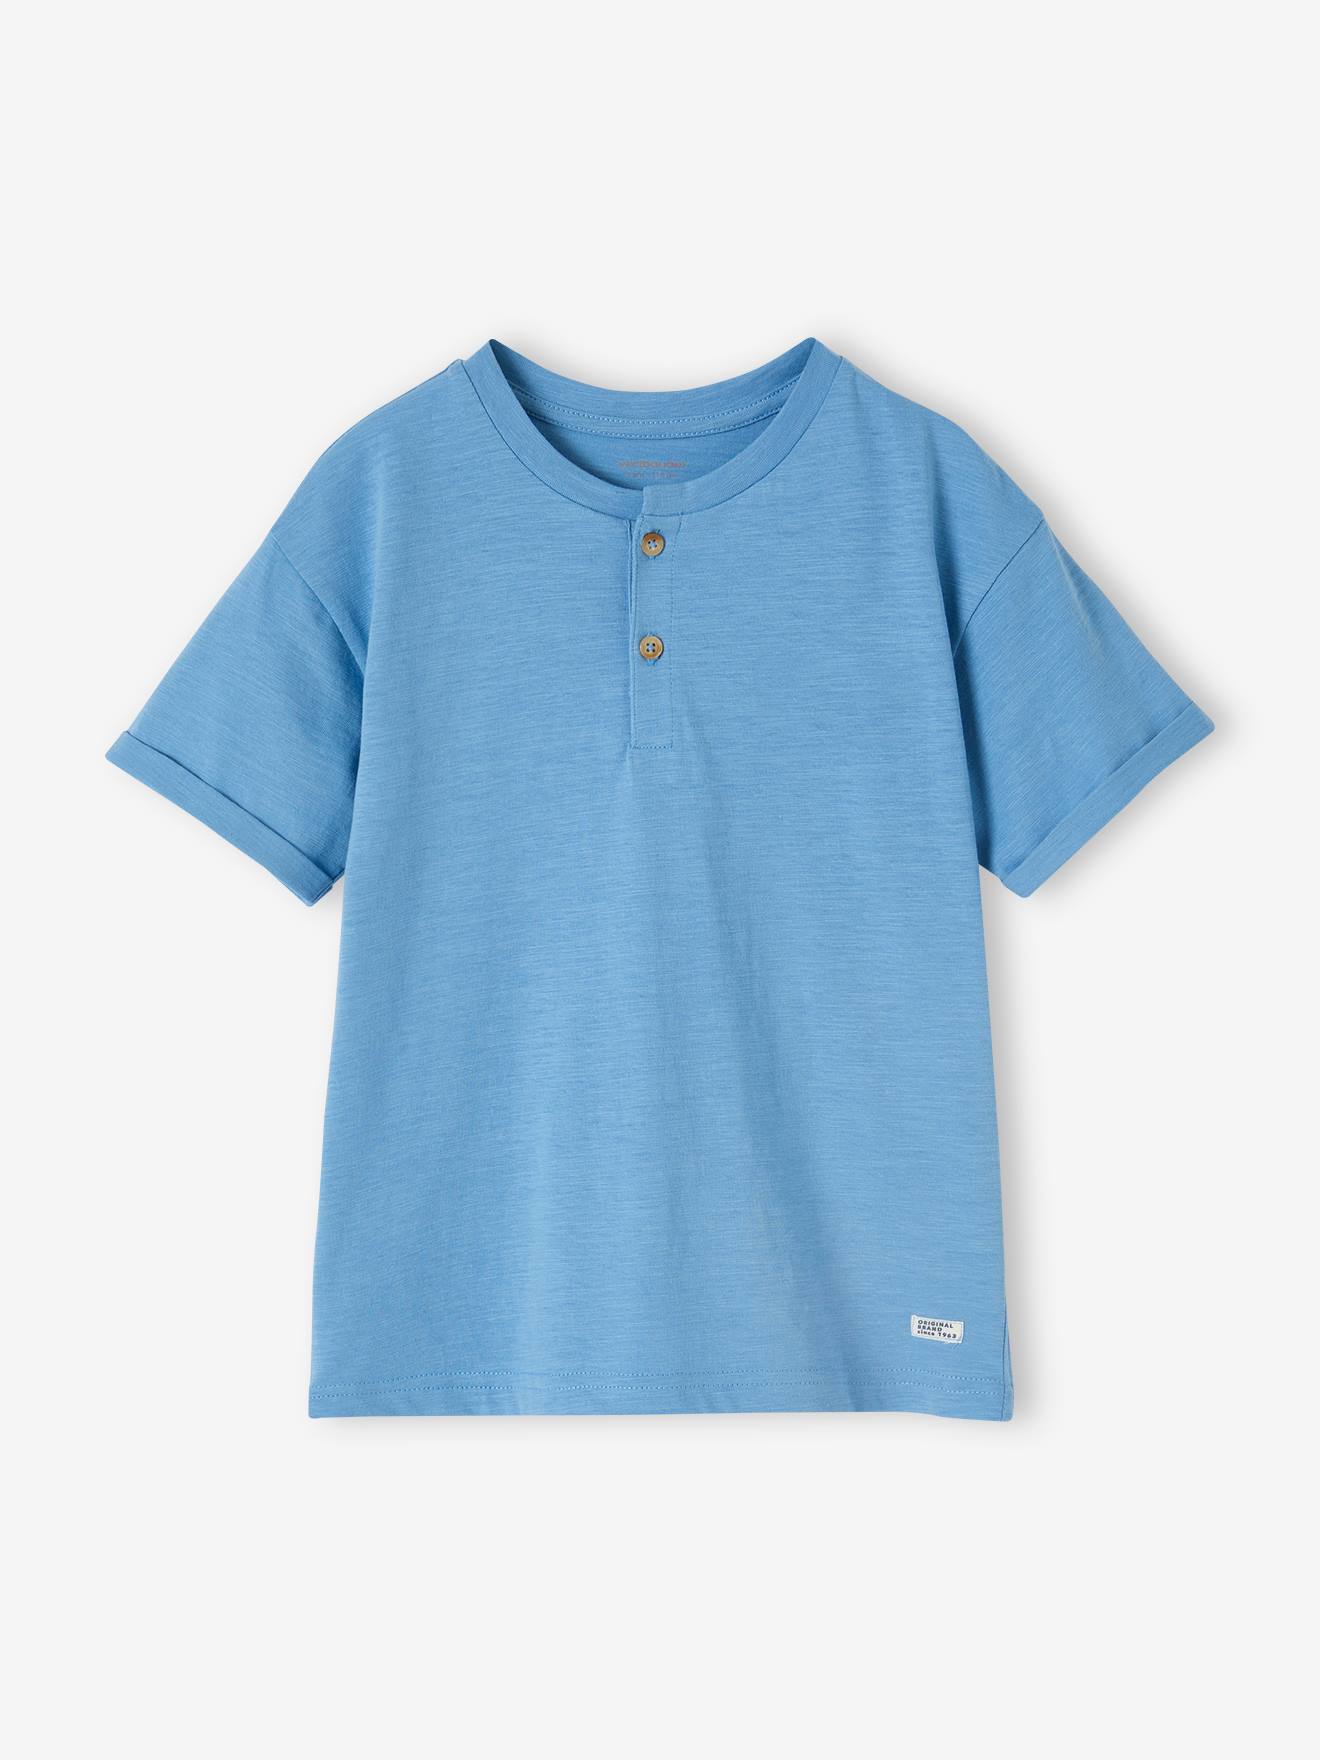 VERTBAUDET Camiseta tunecina Basics niño azul azur